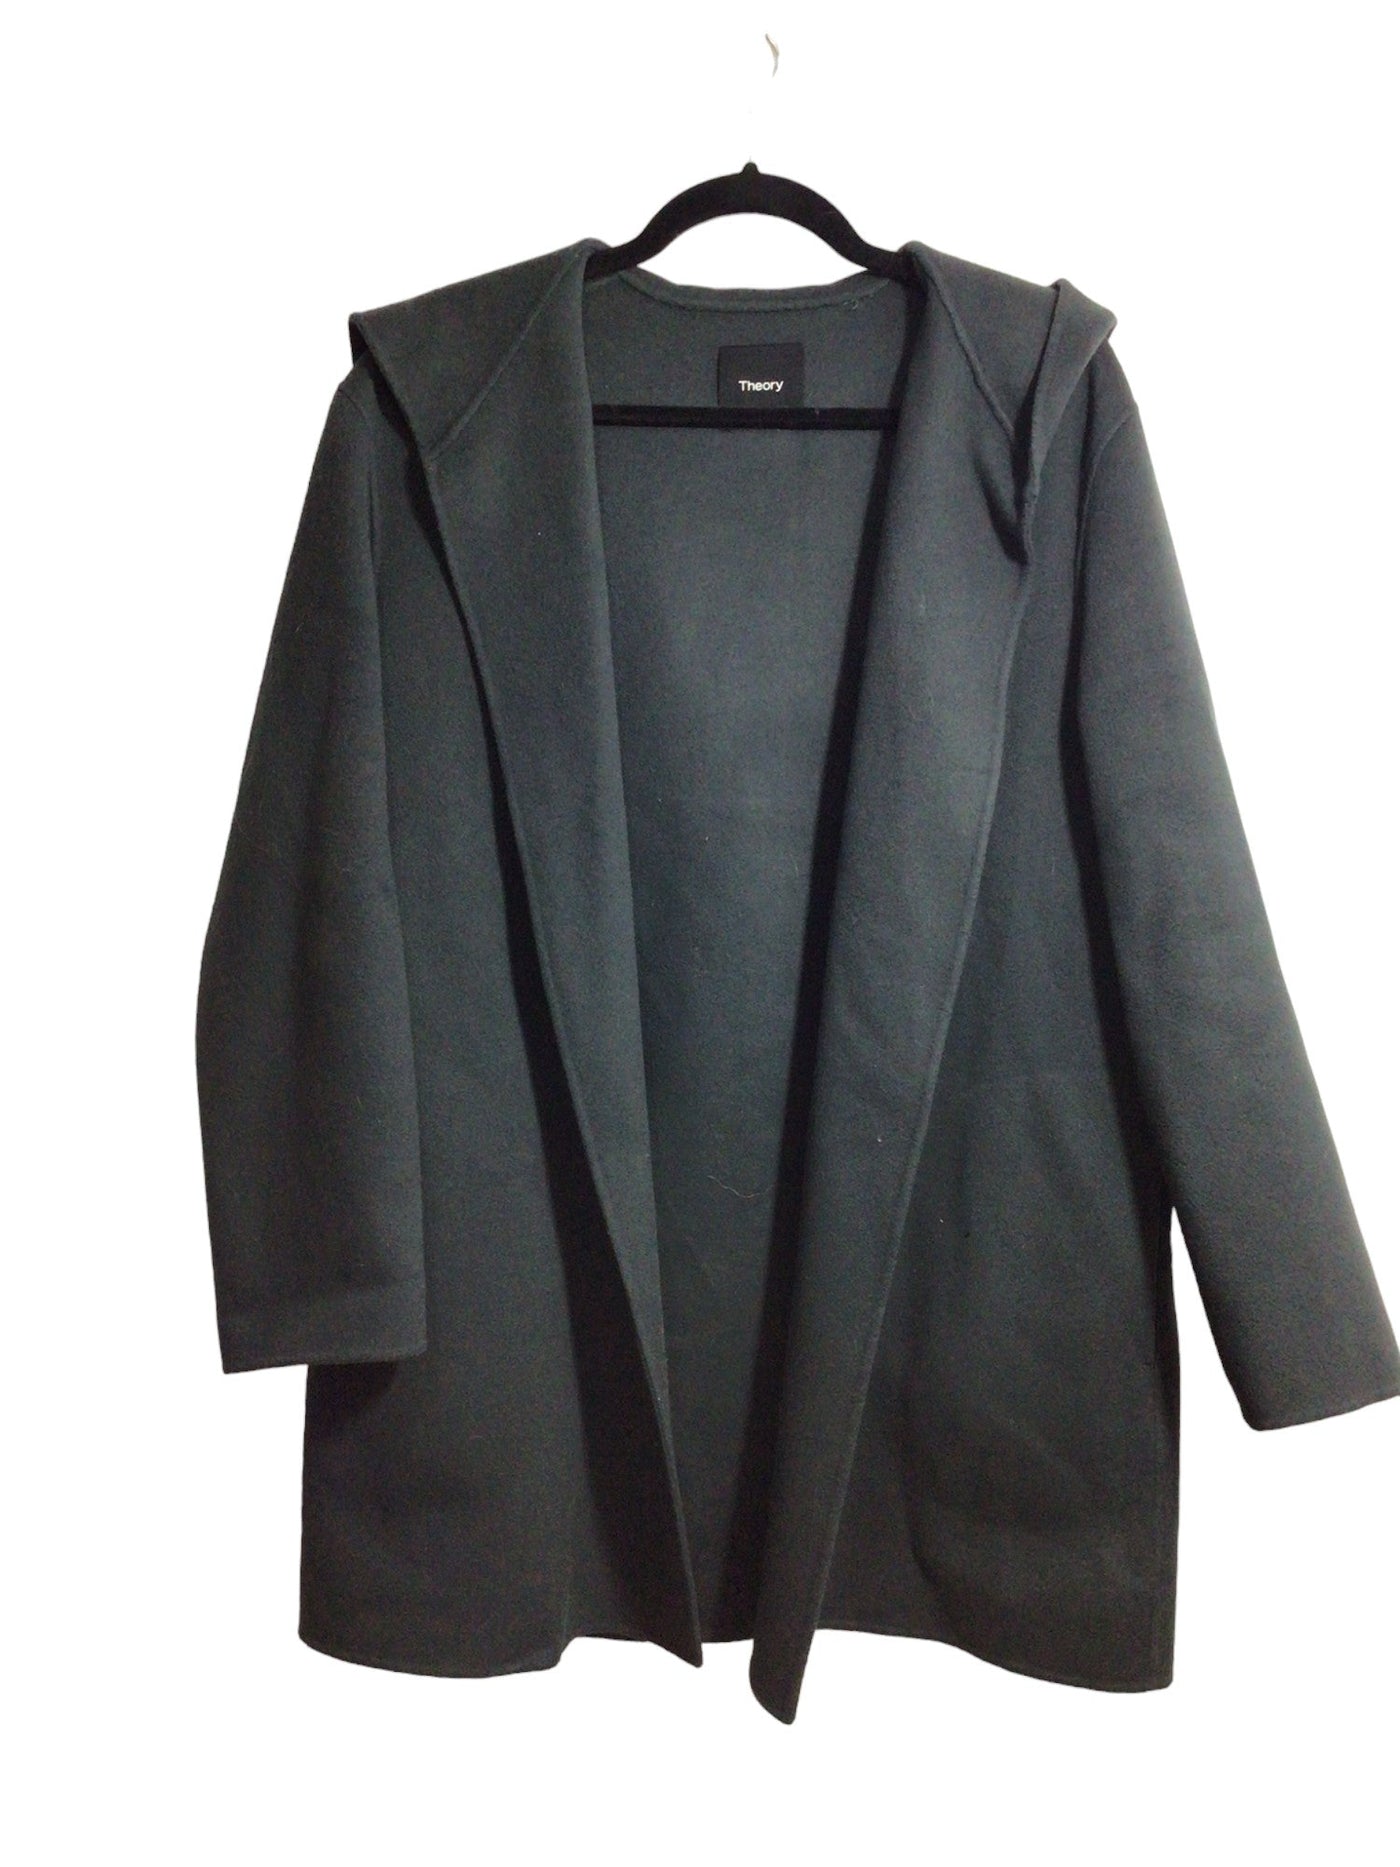 THEORY Women Coats Regular fit in Gray - Size S | 79.99 $ KOOP